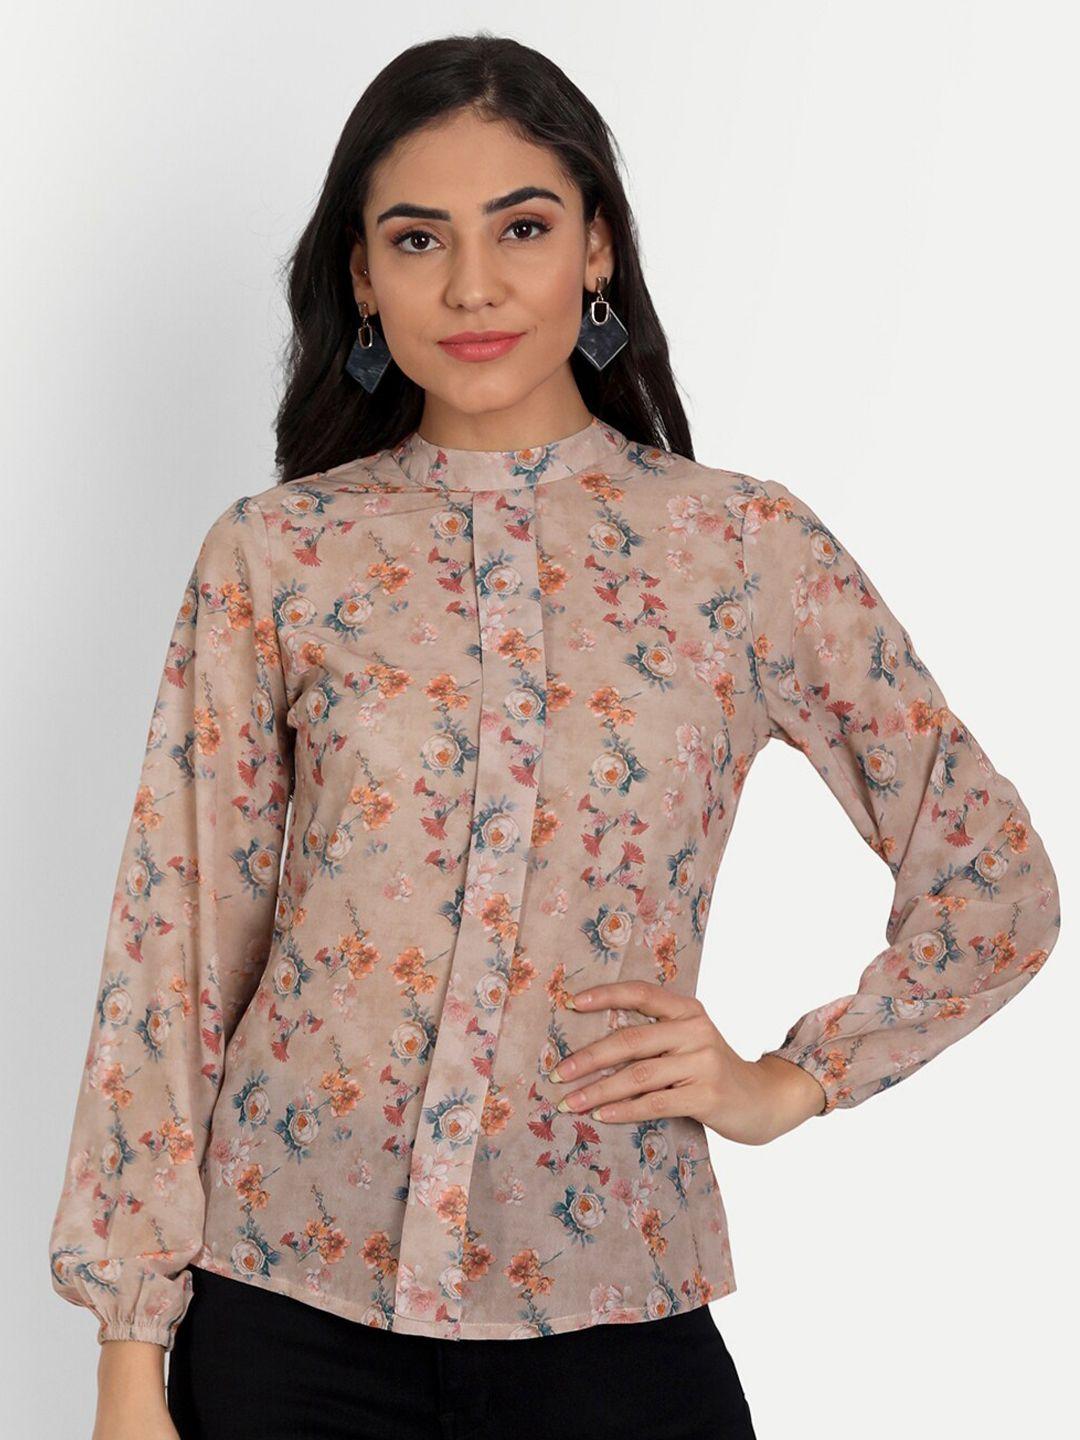 masakali co brown floral print mandarin collar georgette shirt style top